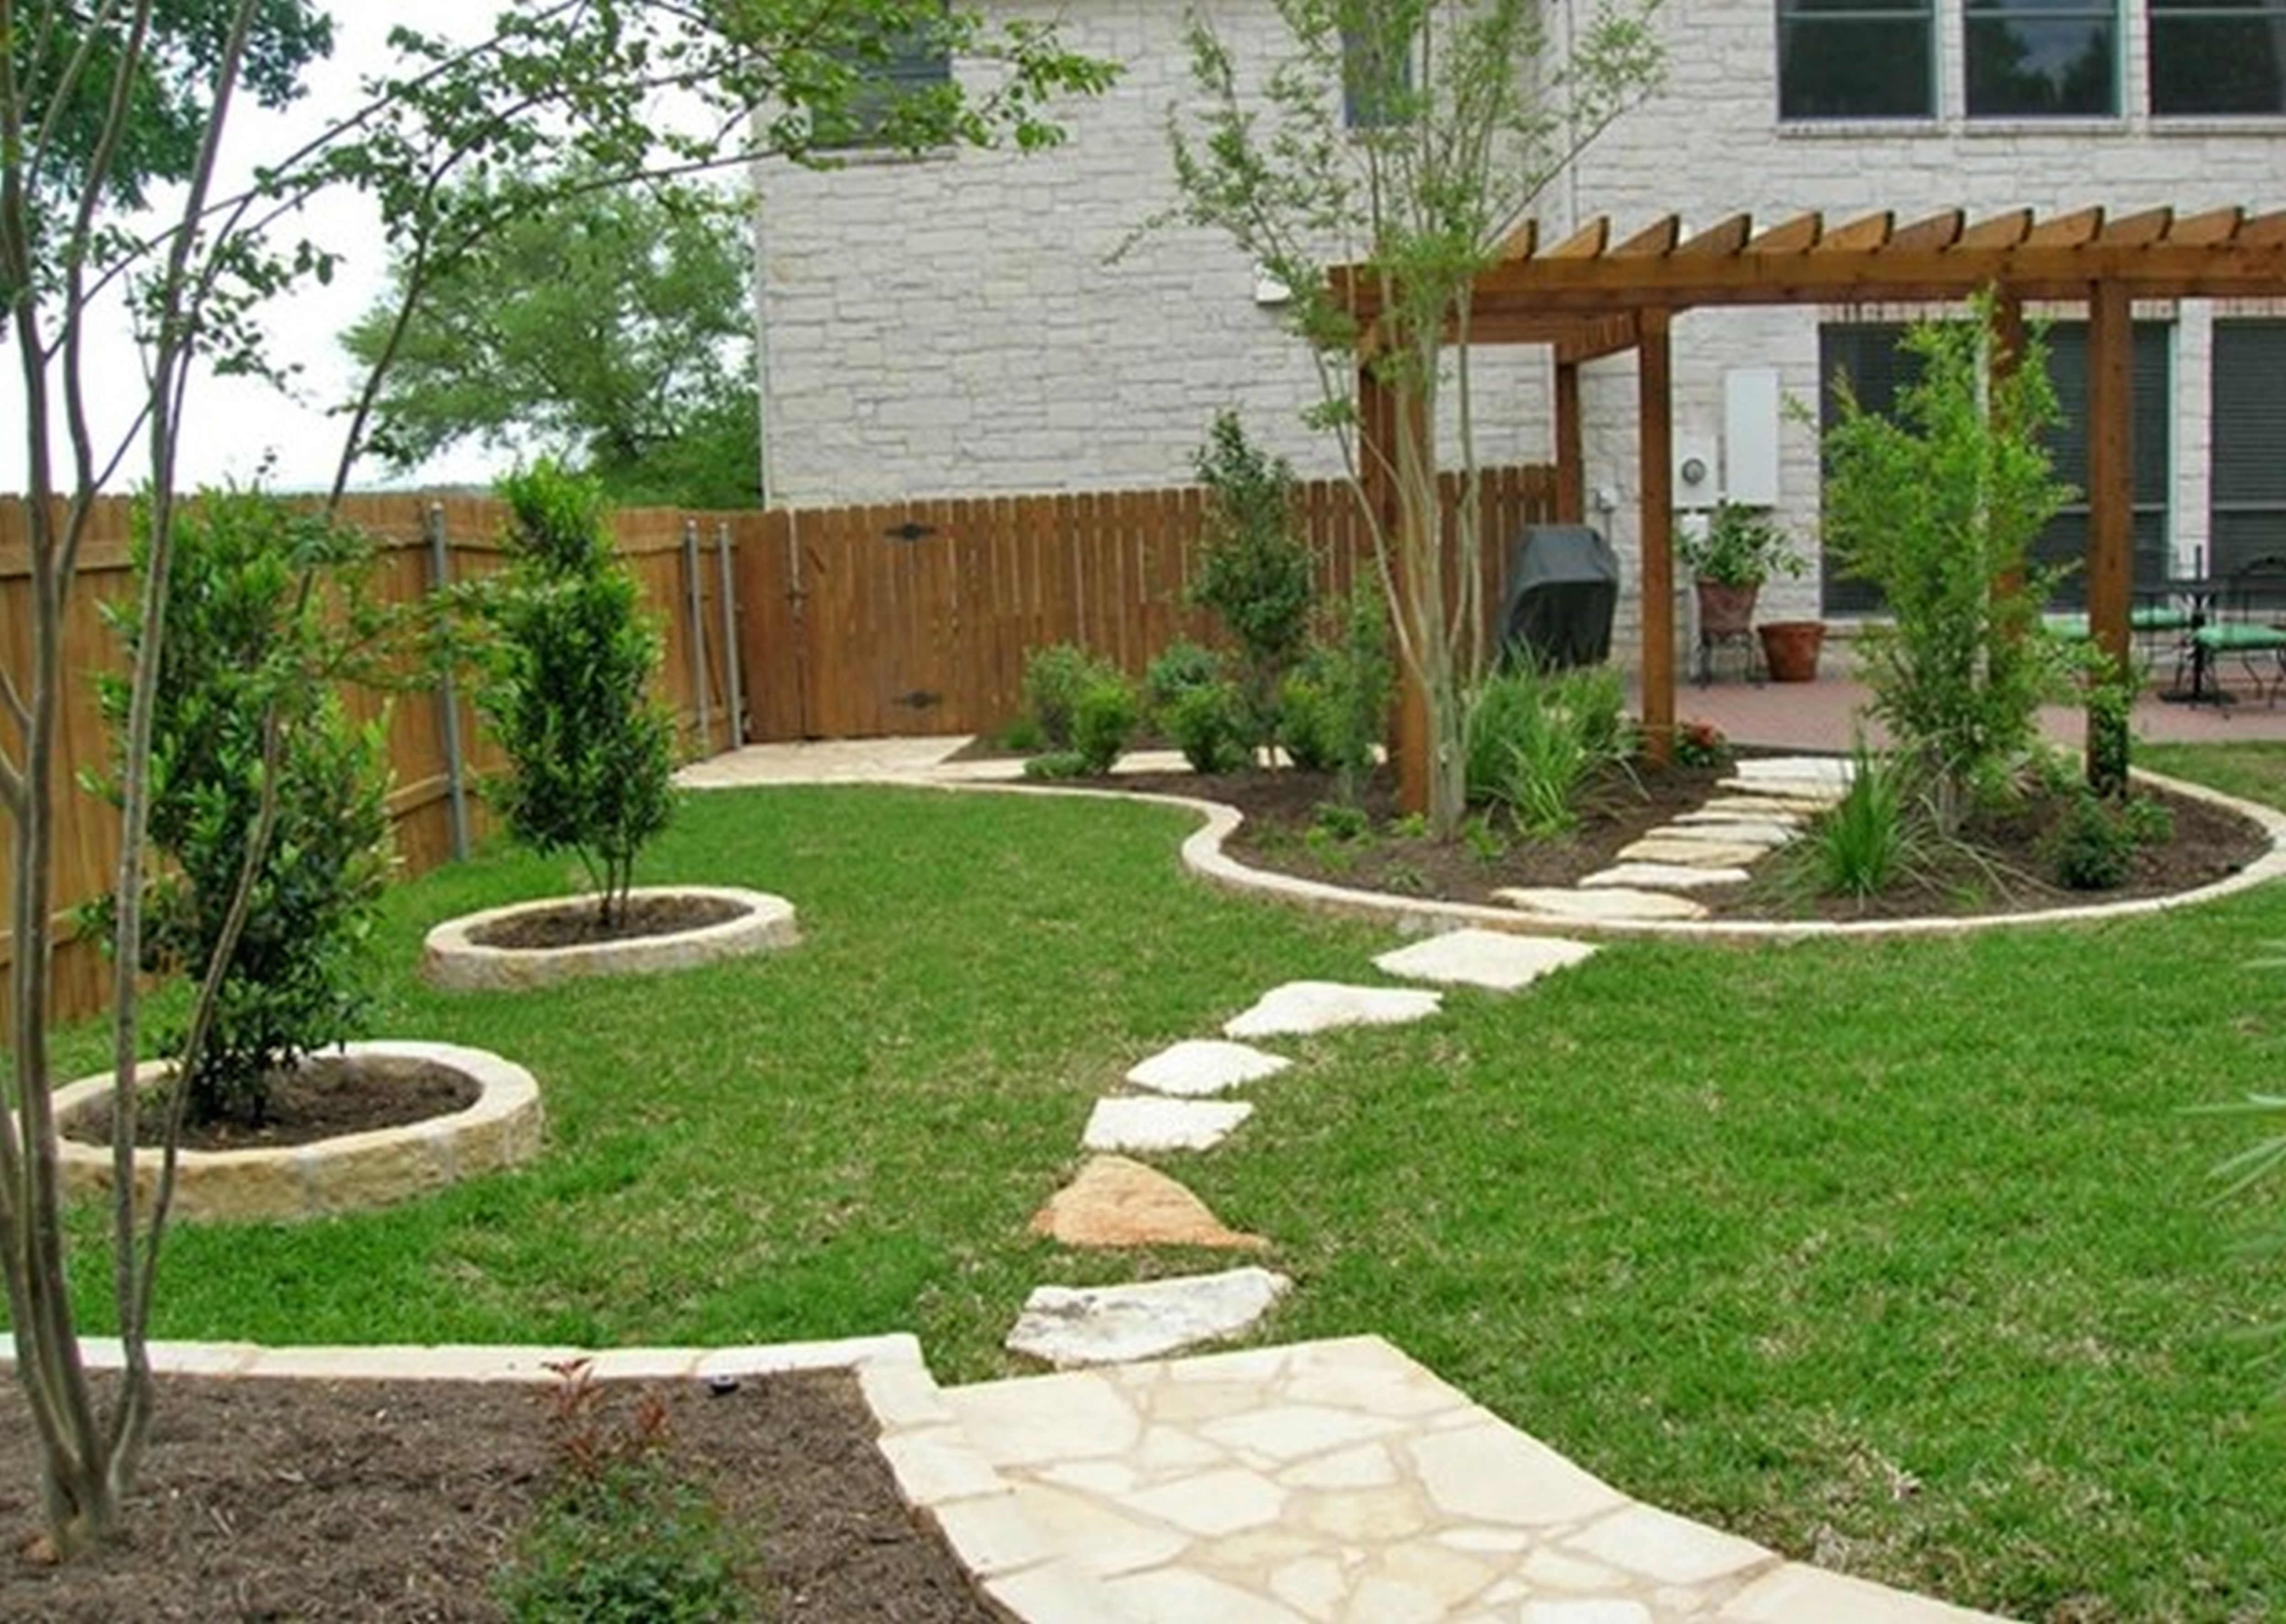 Best ideas about Backyard Ideas For Small Yards
. Save or Pin Patio Ideas For Small Yards Yard Landscaping Garden Design Now.